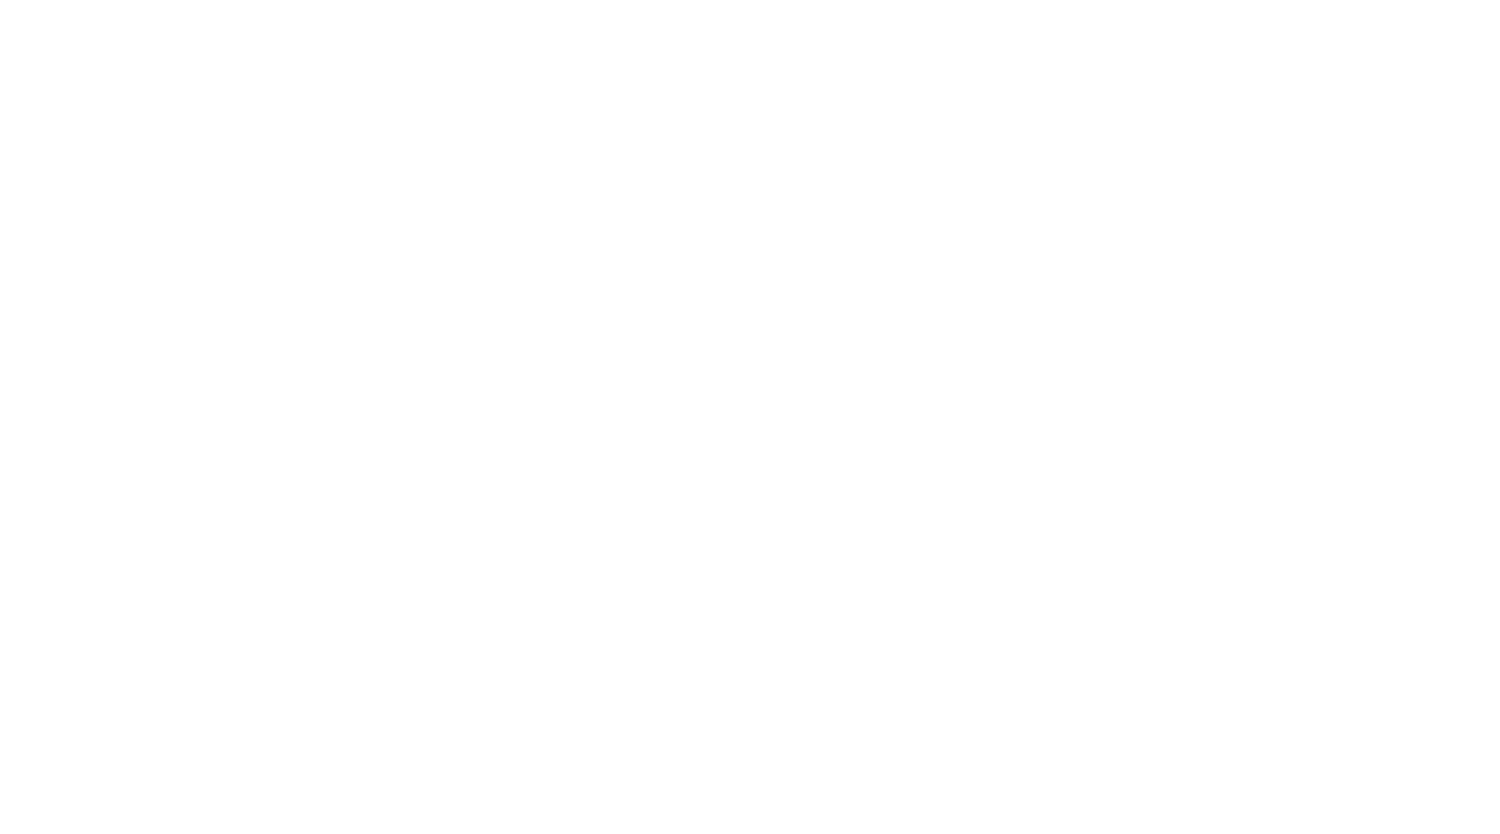 Odenwald-Liebe.de